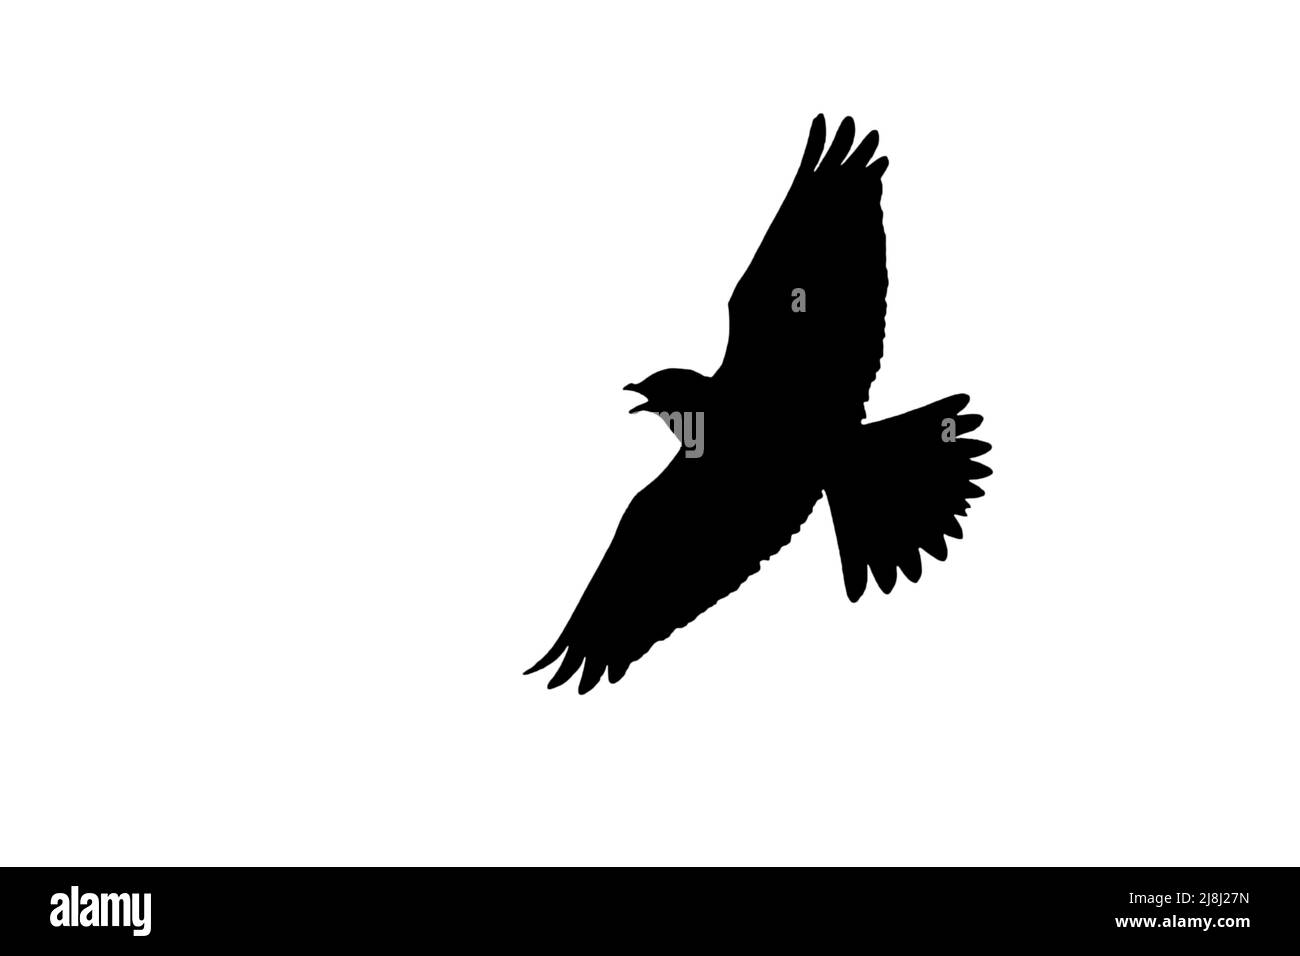 Silueta de claraboya euroasiática (Alauda arvensis) en vuelo contorneada sobre fondo blanco para mostrar alas, cabeza y cola Foto de stock